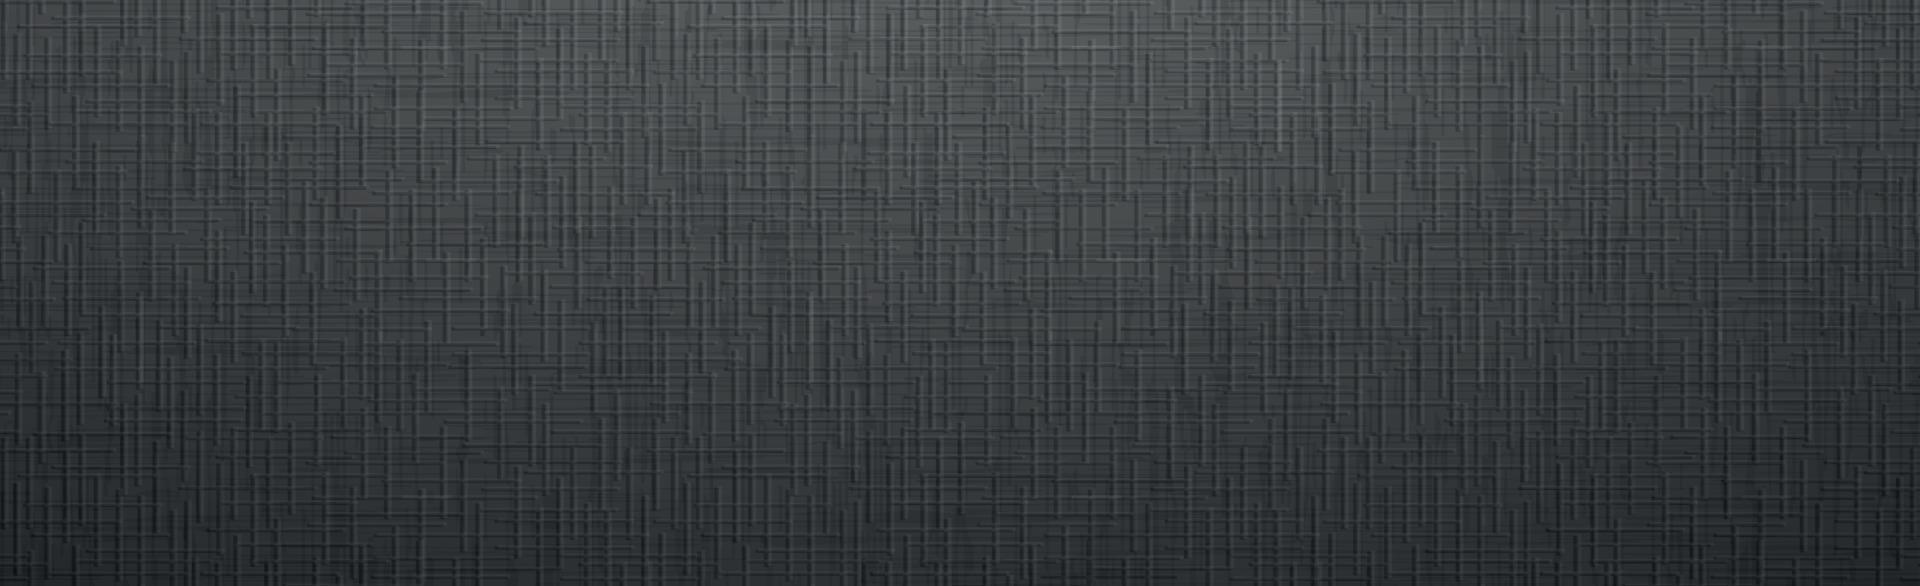 Dark Black Textured Panoramic Background vector